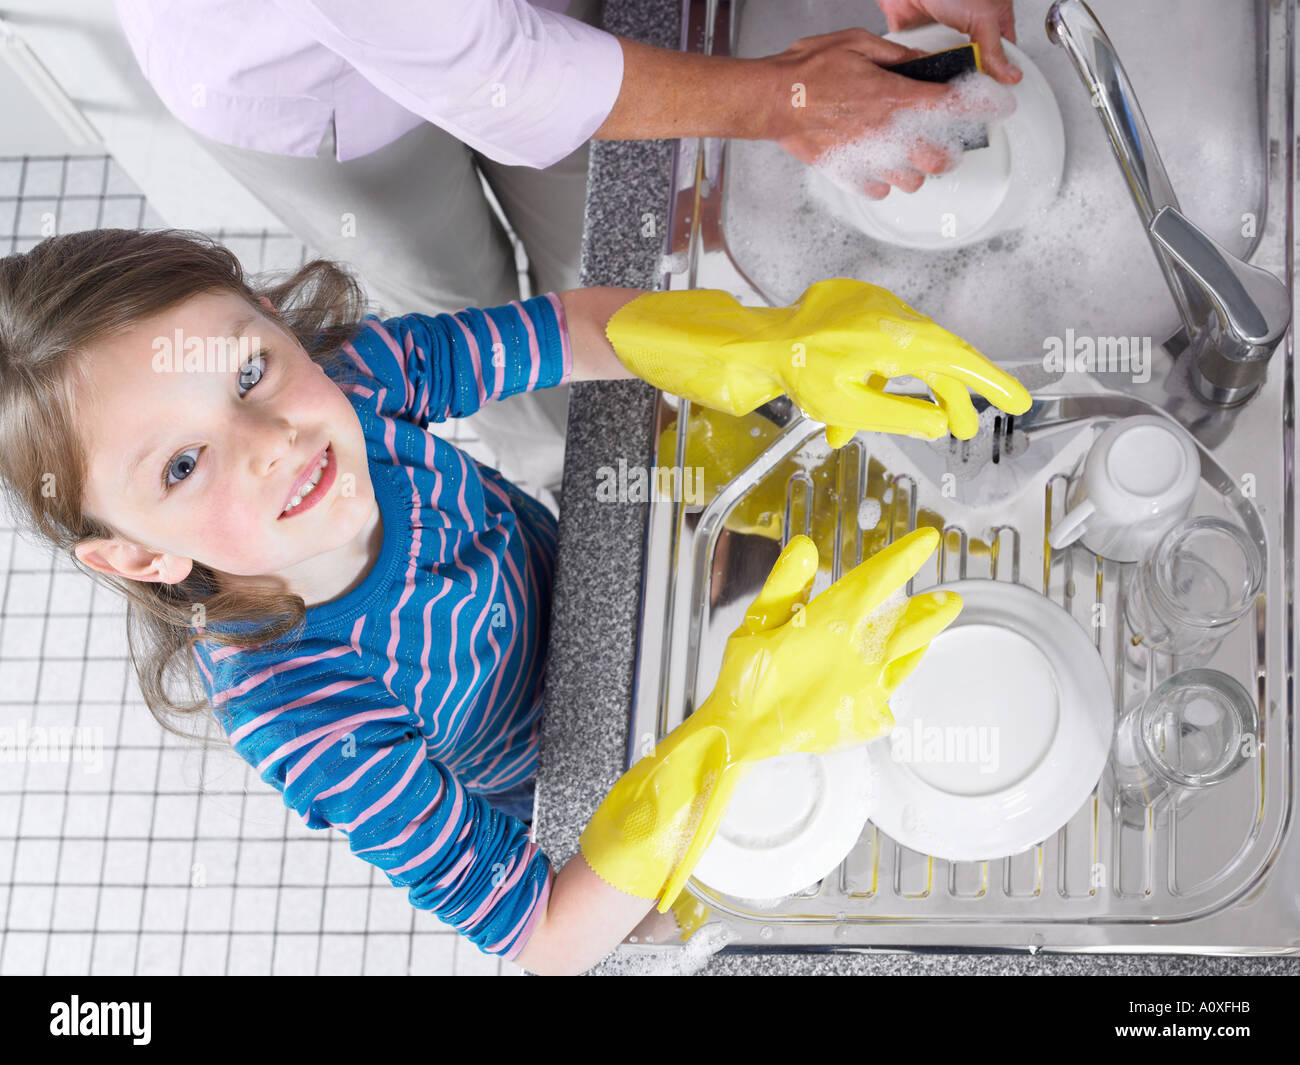 День мытья посуды